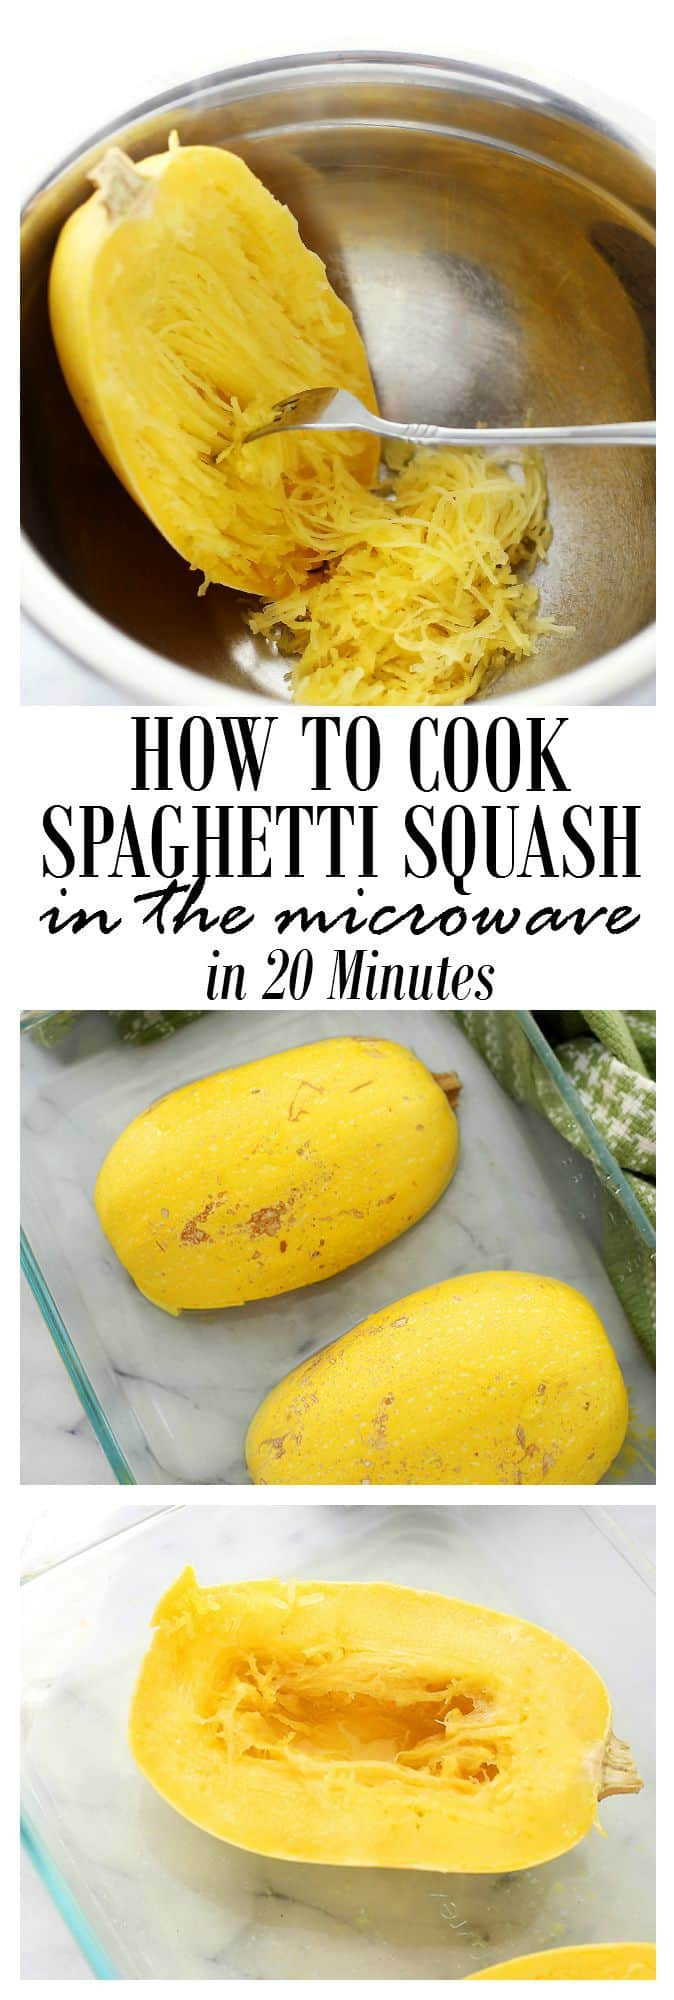 Cooking Spaghetti Squash In Microwave
 Mediterranean Spaghetti Squash Boats